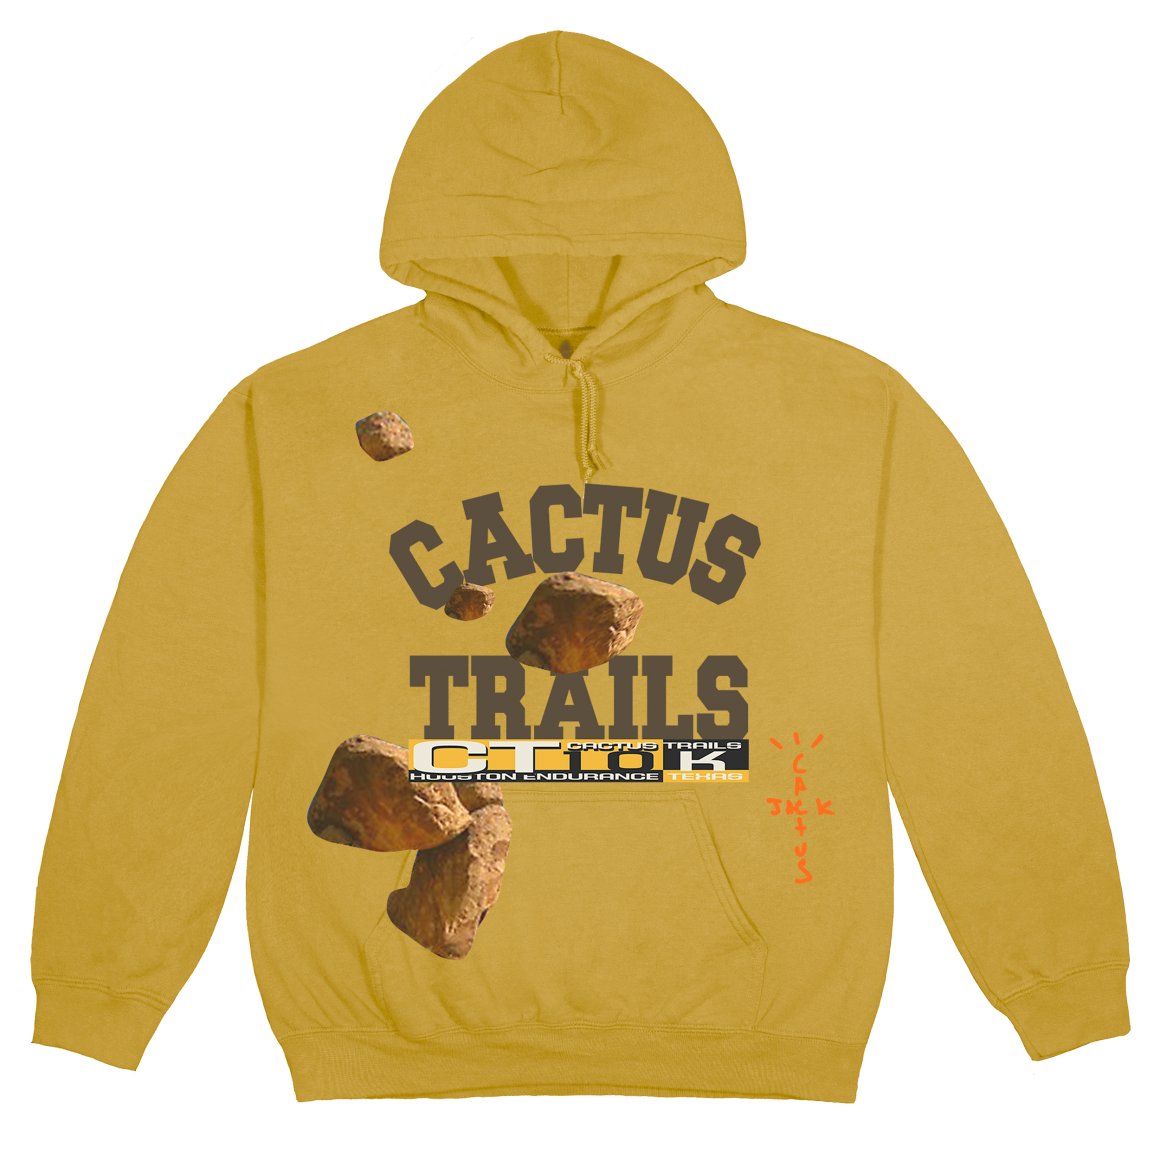 Nike x Travis Scott - Cactus Trails